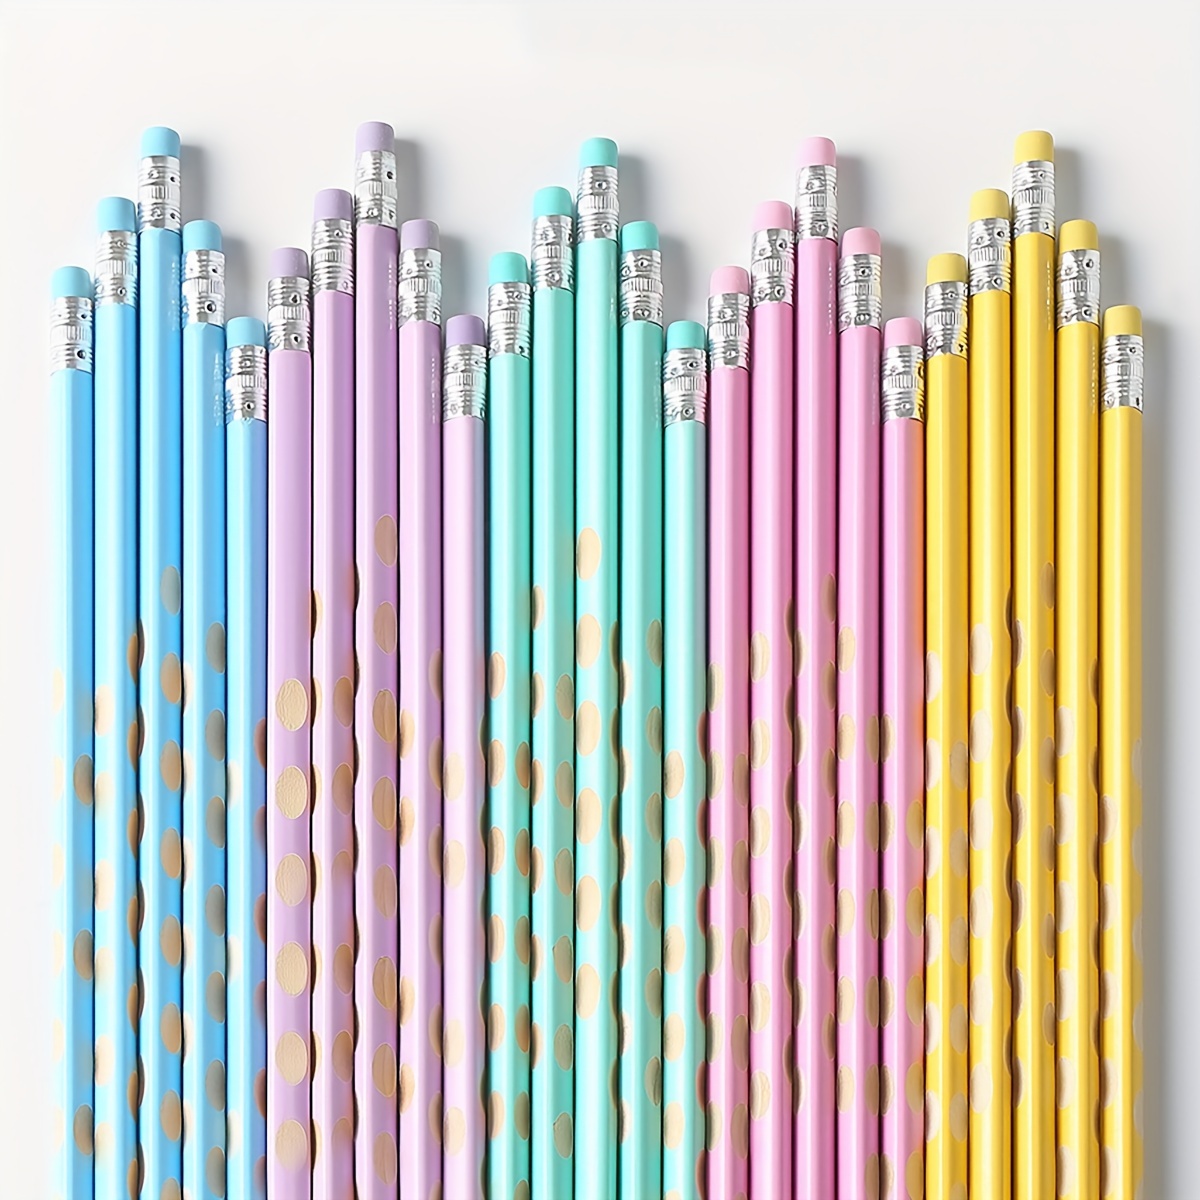 

Random 10pcs Pencil Hole Pen Resin Color Rod Hb Pencil Macaroon Color